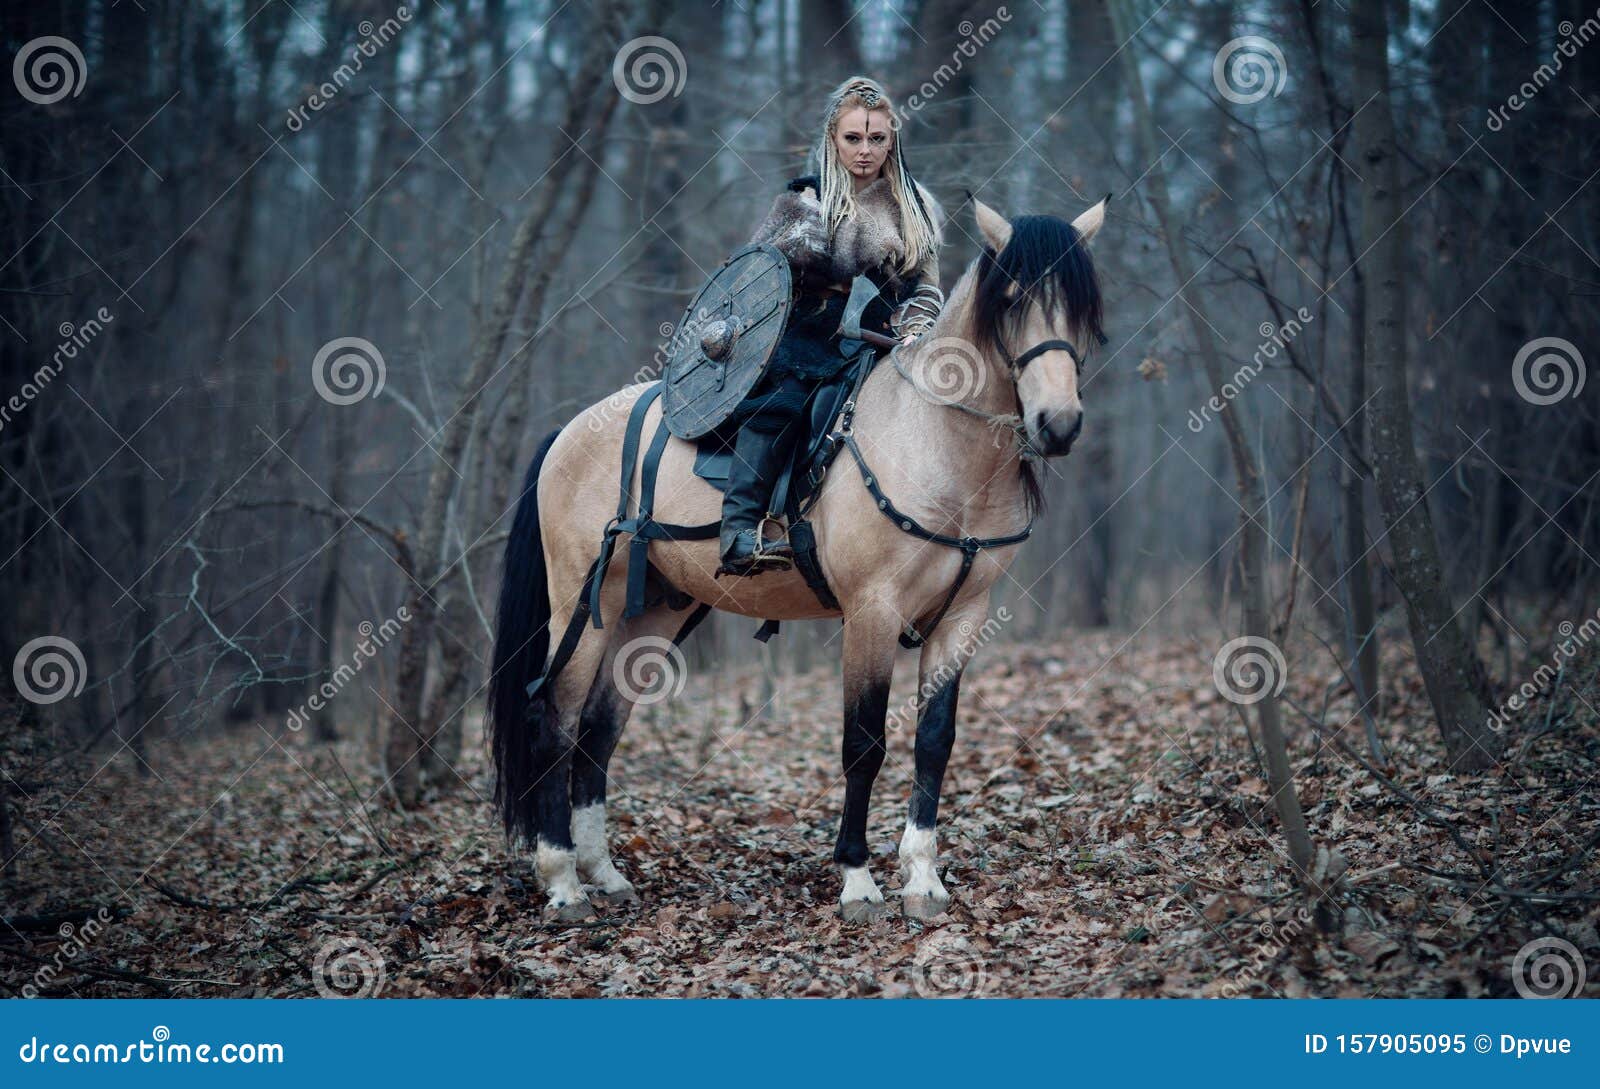 viking warrior female ridding a horse at twilight autumn forest - medieval movie scene